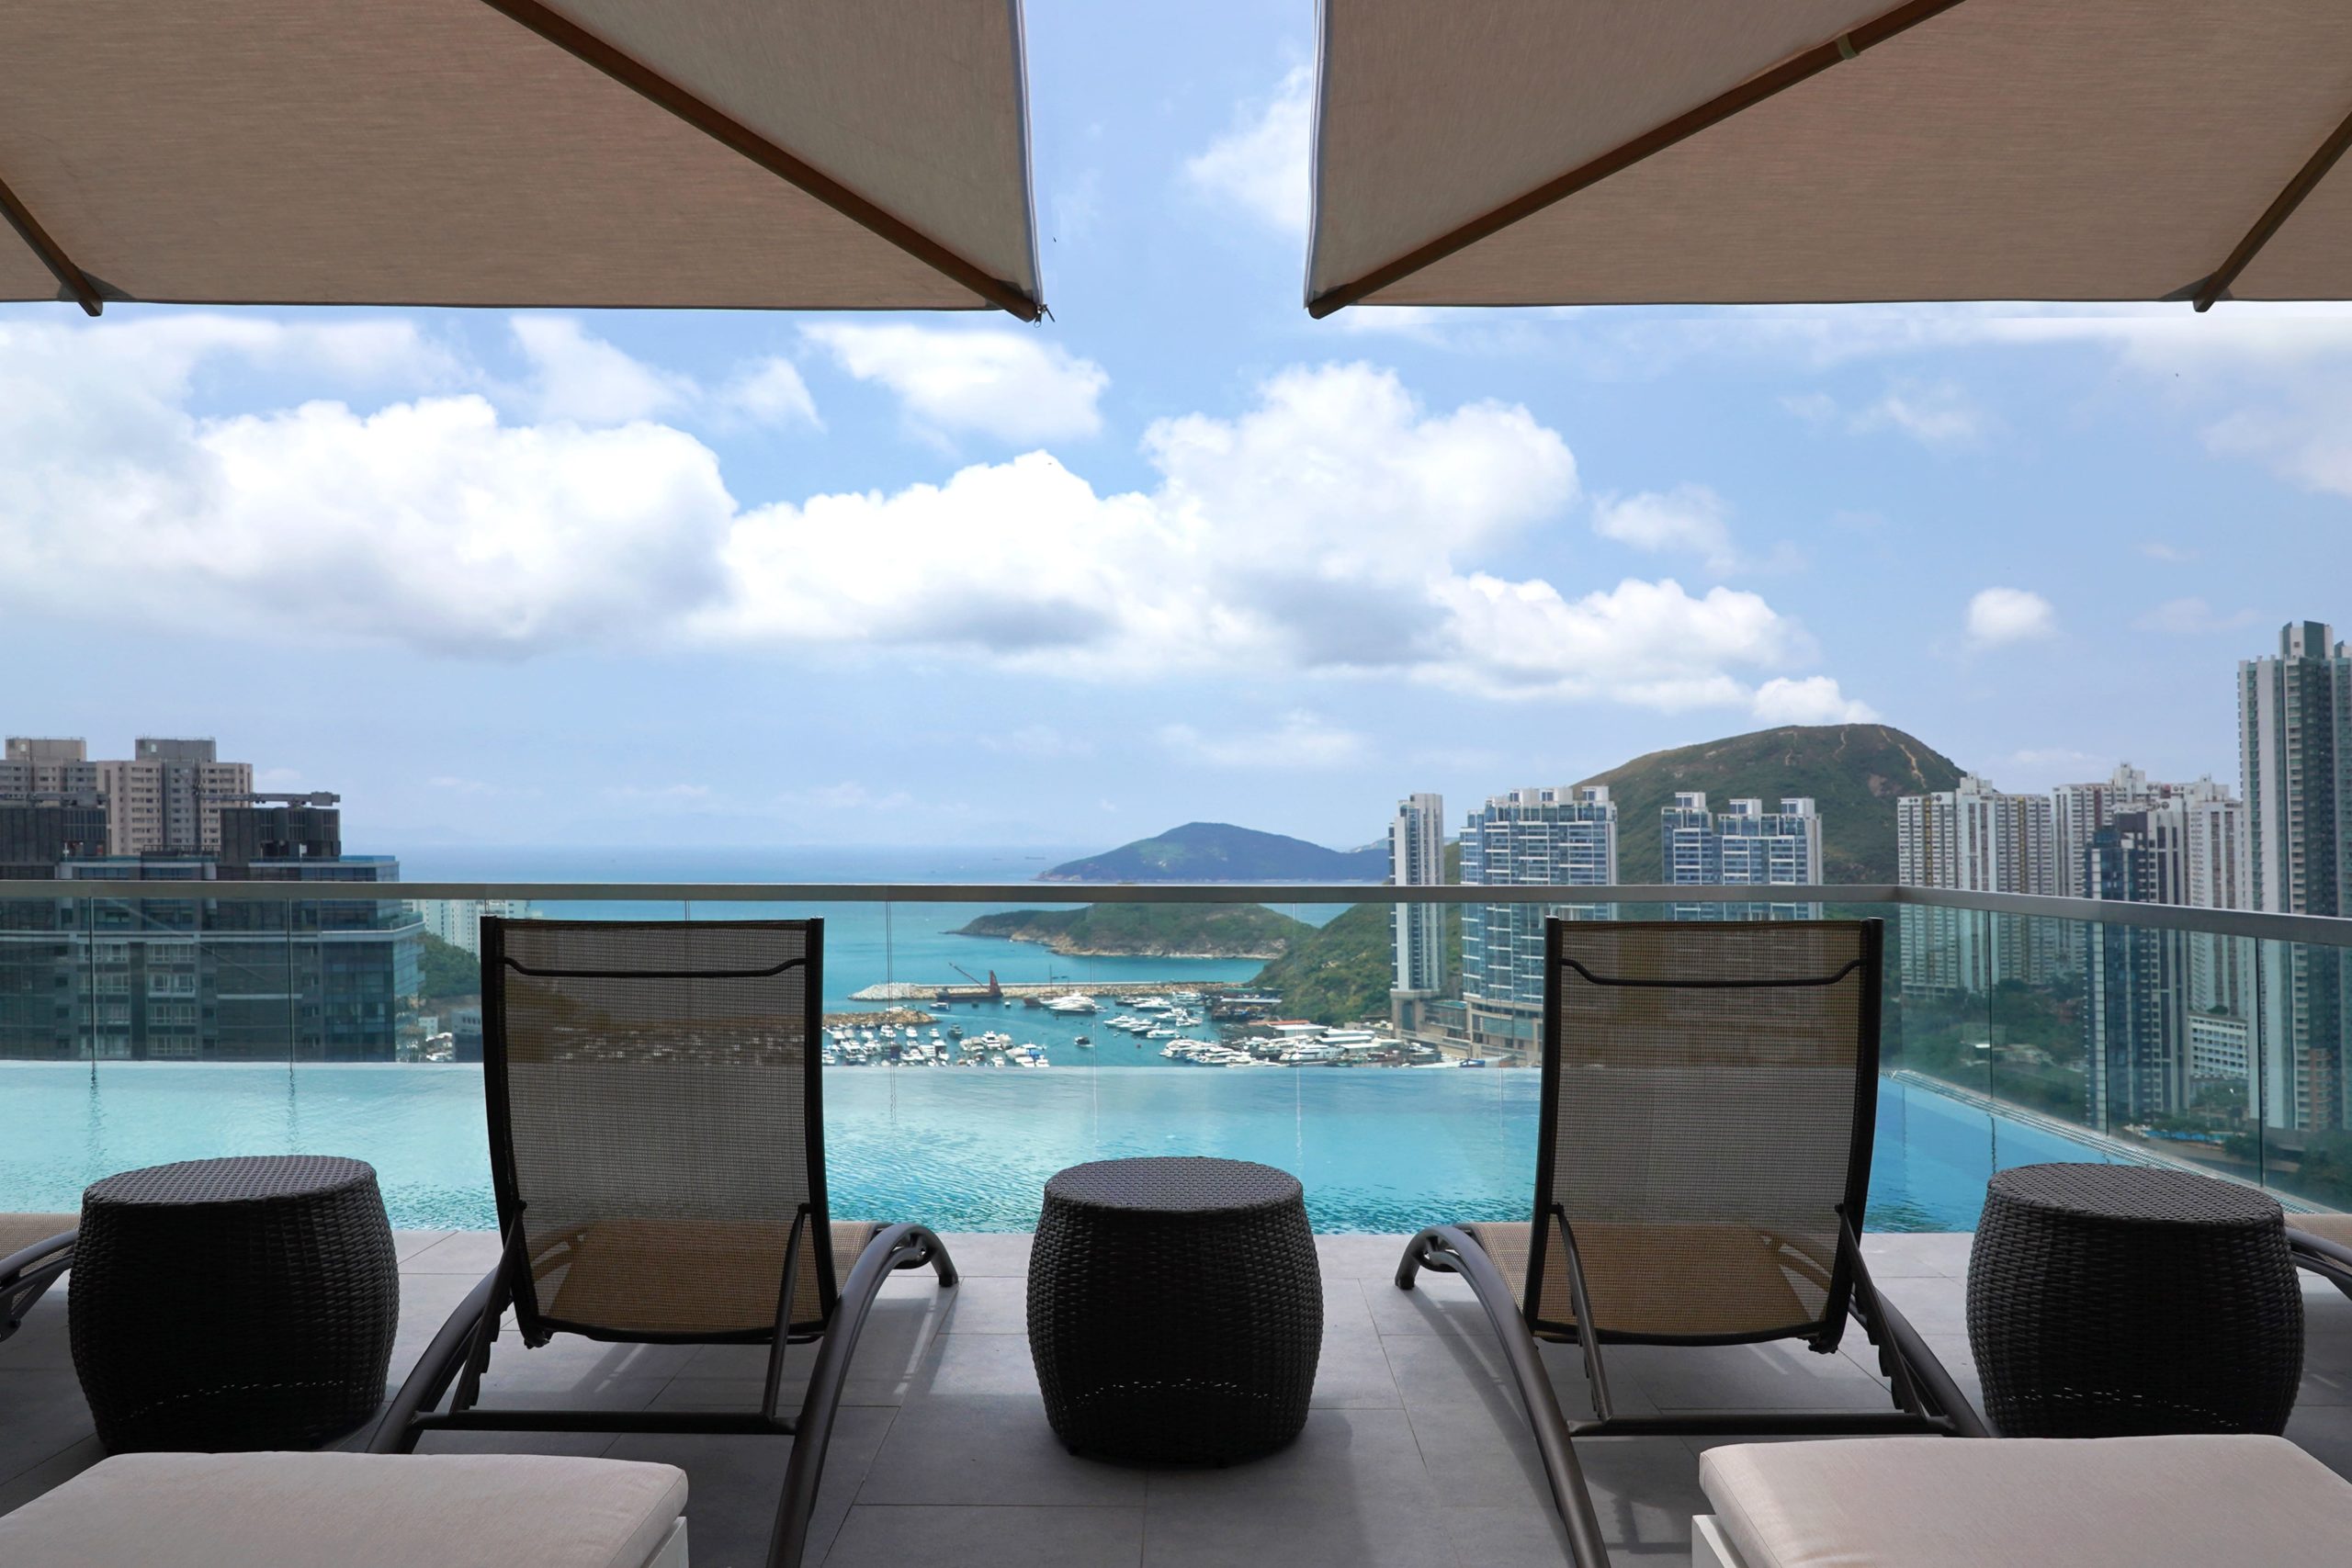 A first look at the Arca, Hong Kong's newest urban hotel opening in Wong Chuk Hang